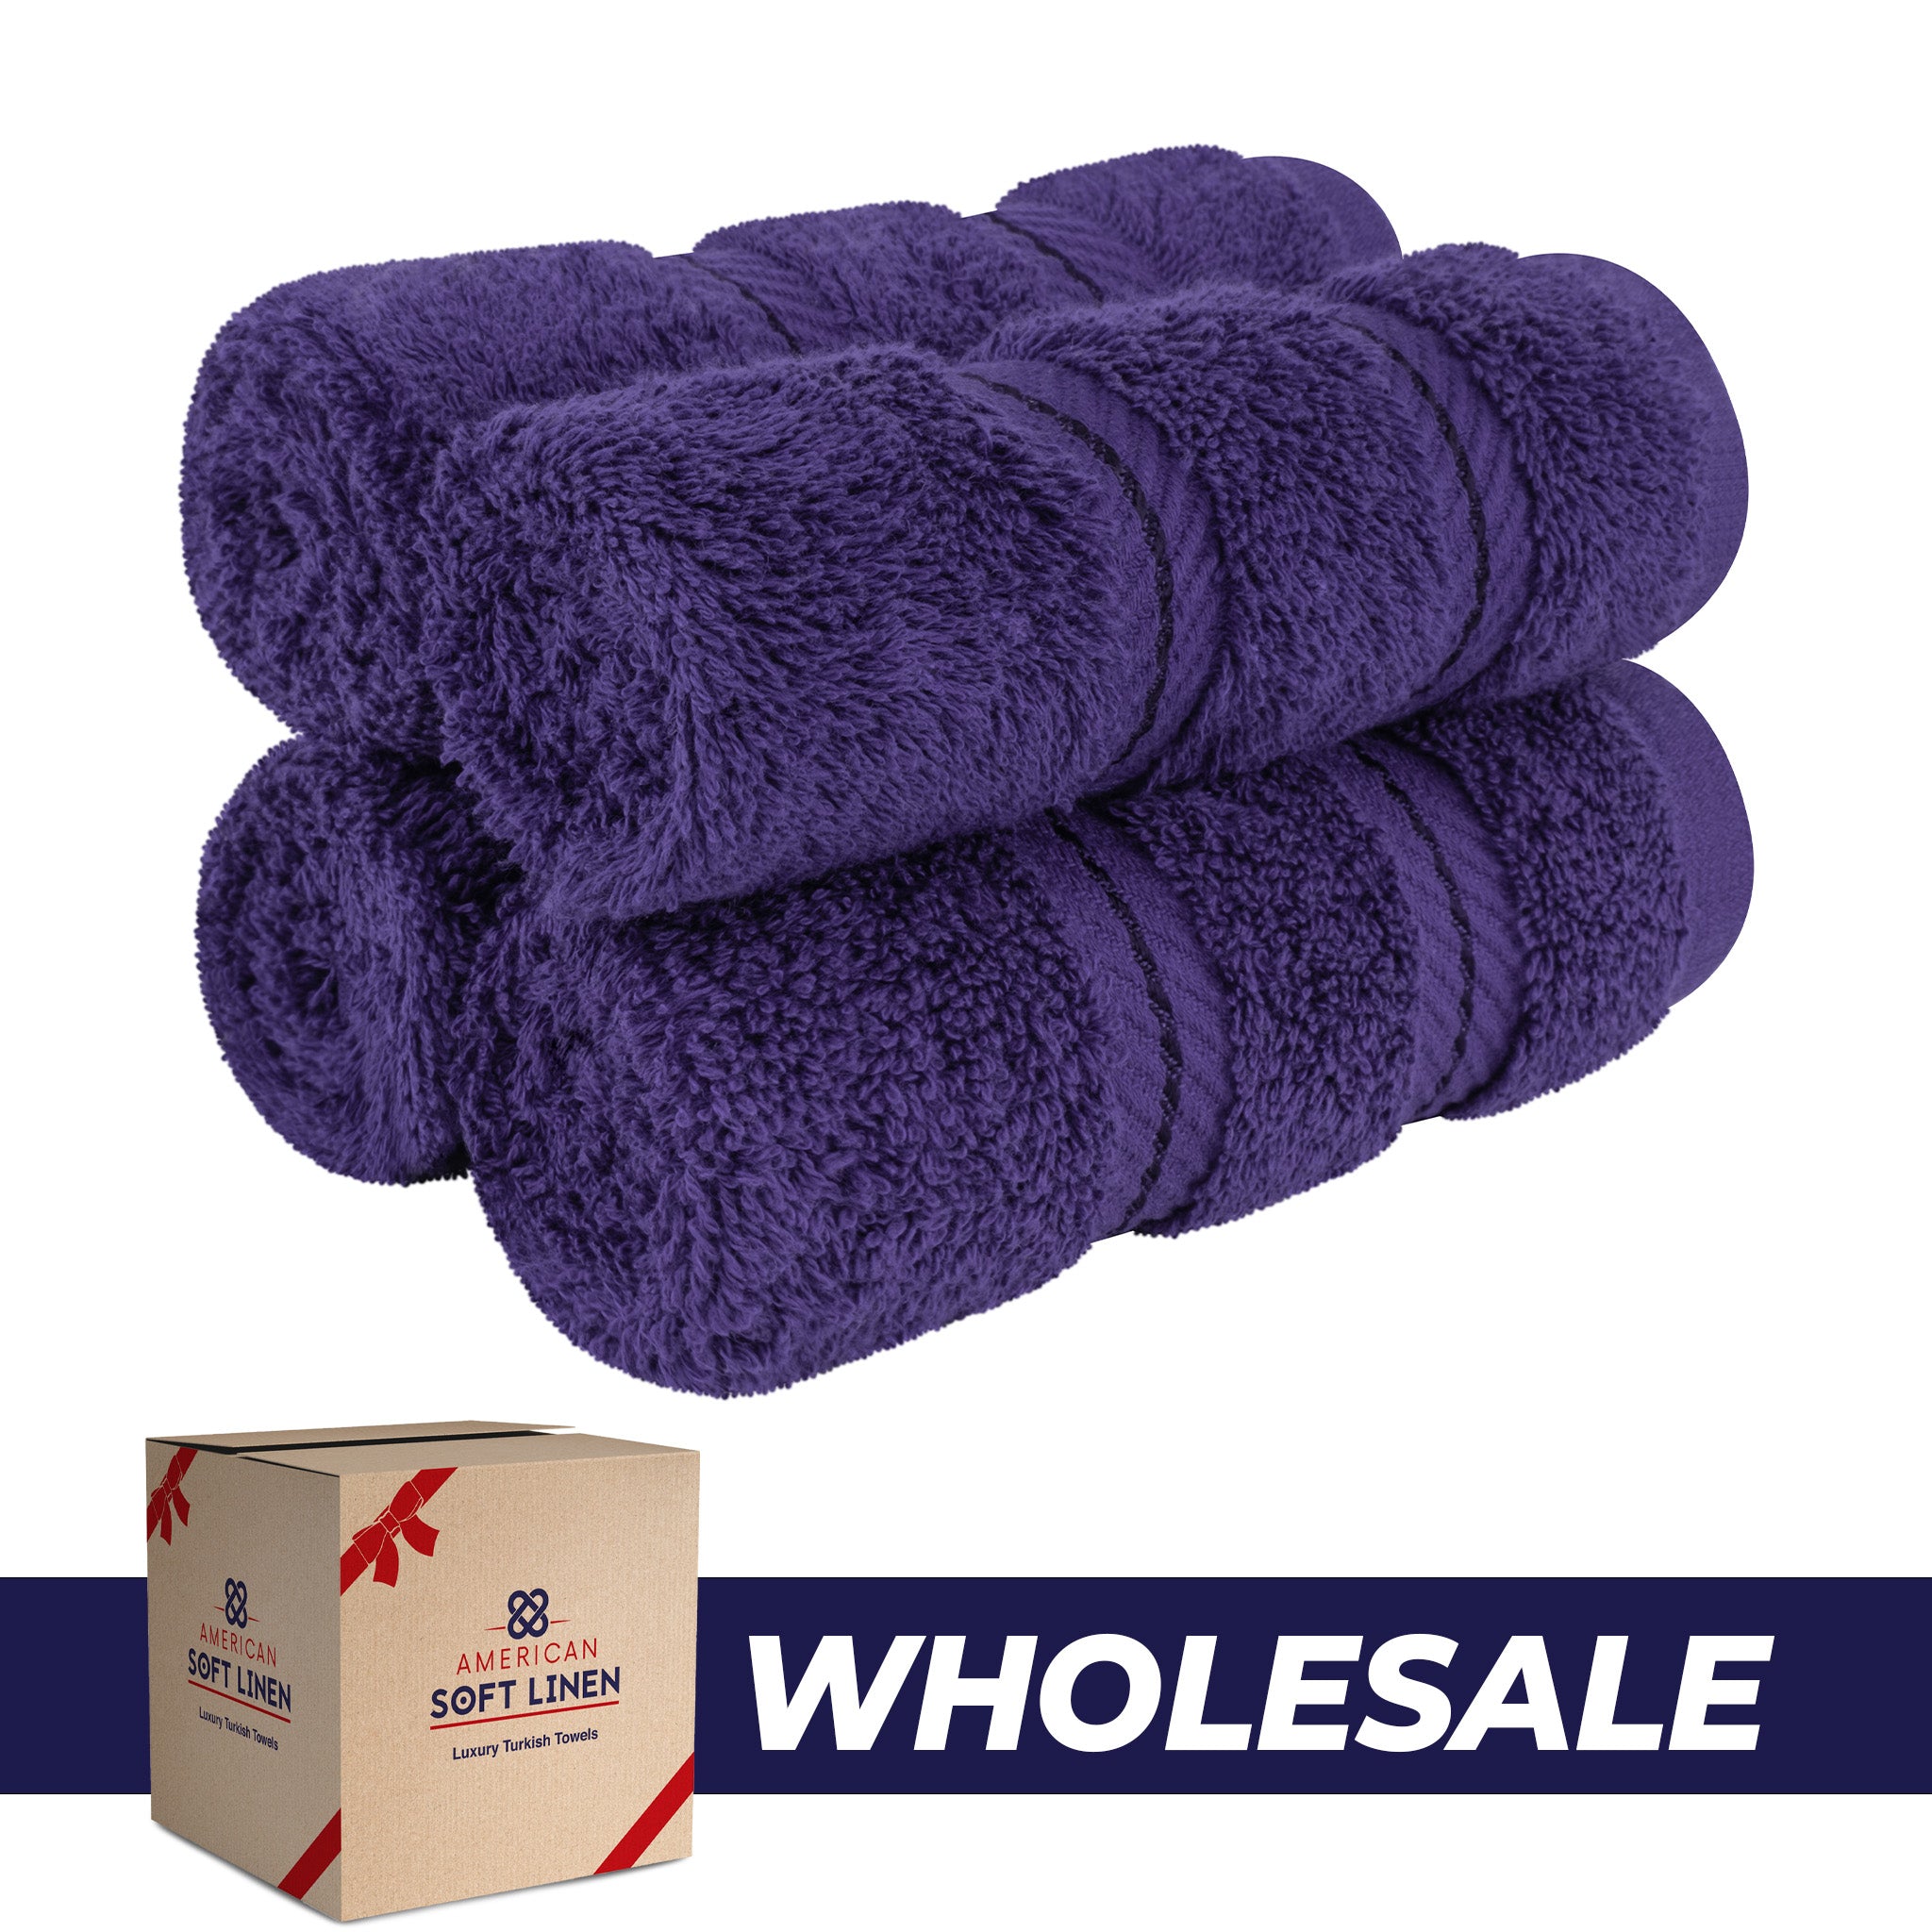  American Soft Linen 100% Turkish Cotton 4 Piece Washcloth Set - Wholesale - purple-0